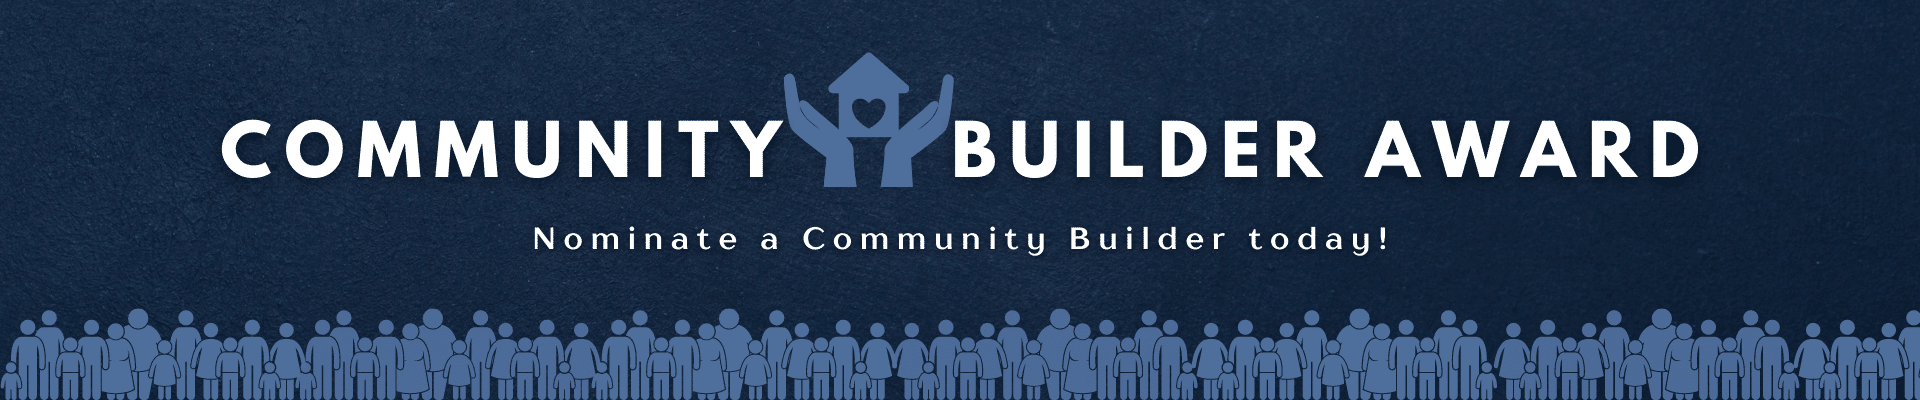 Community Builder Header Image